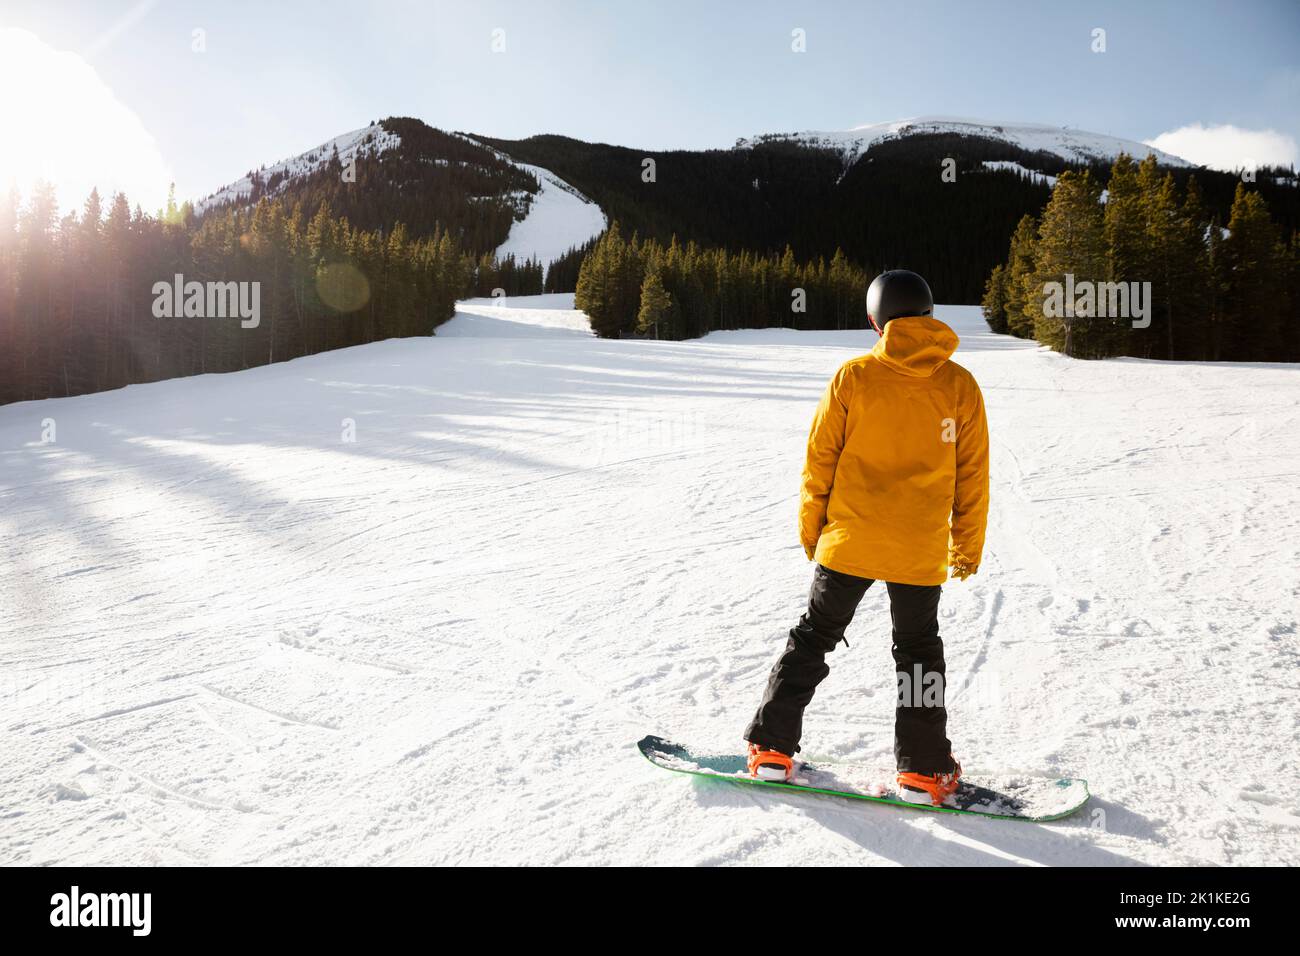 Male snowboarder on sunny snowy mountain ski slope Stock Photo